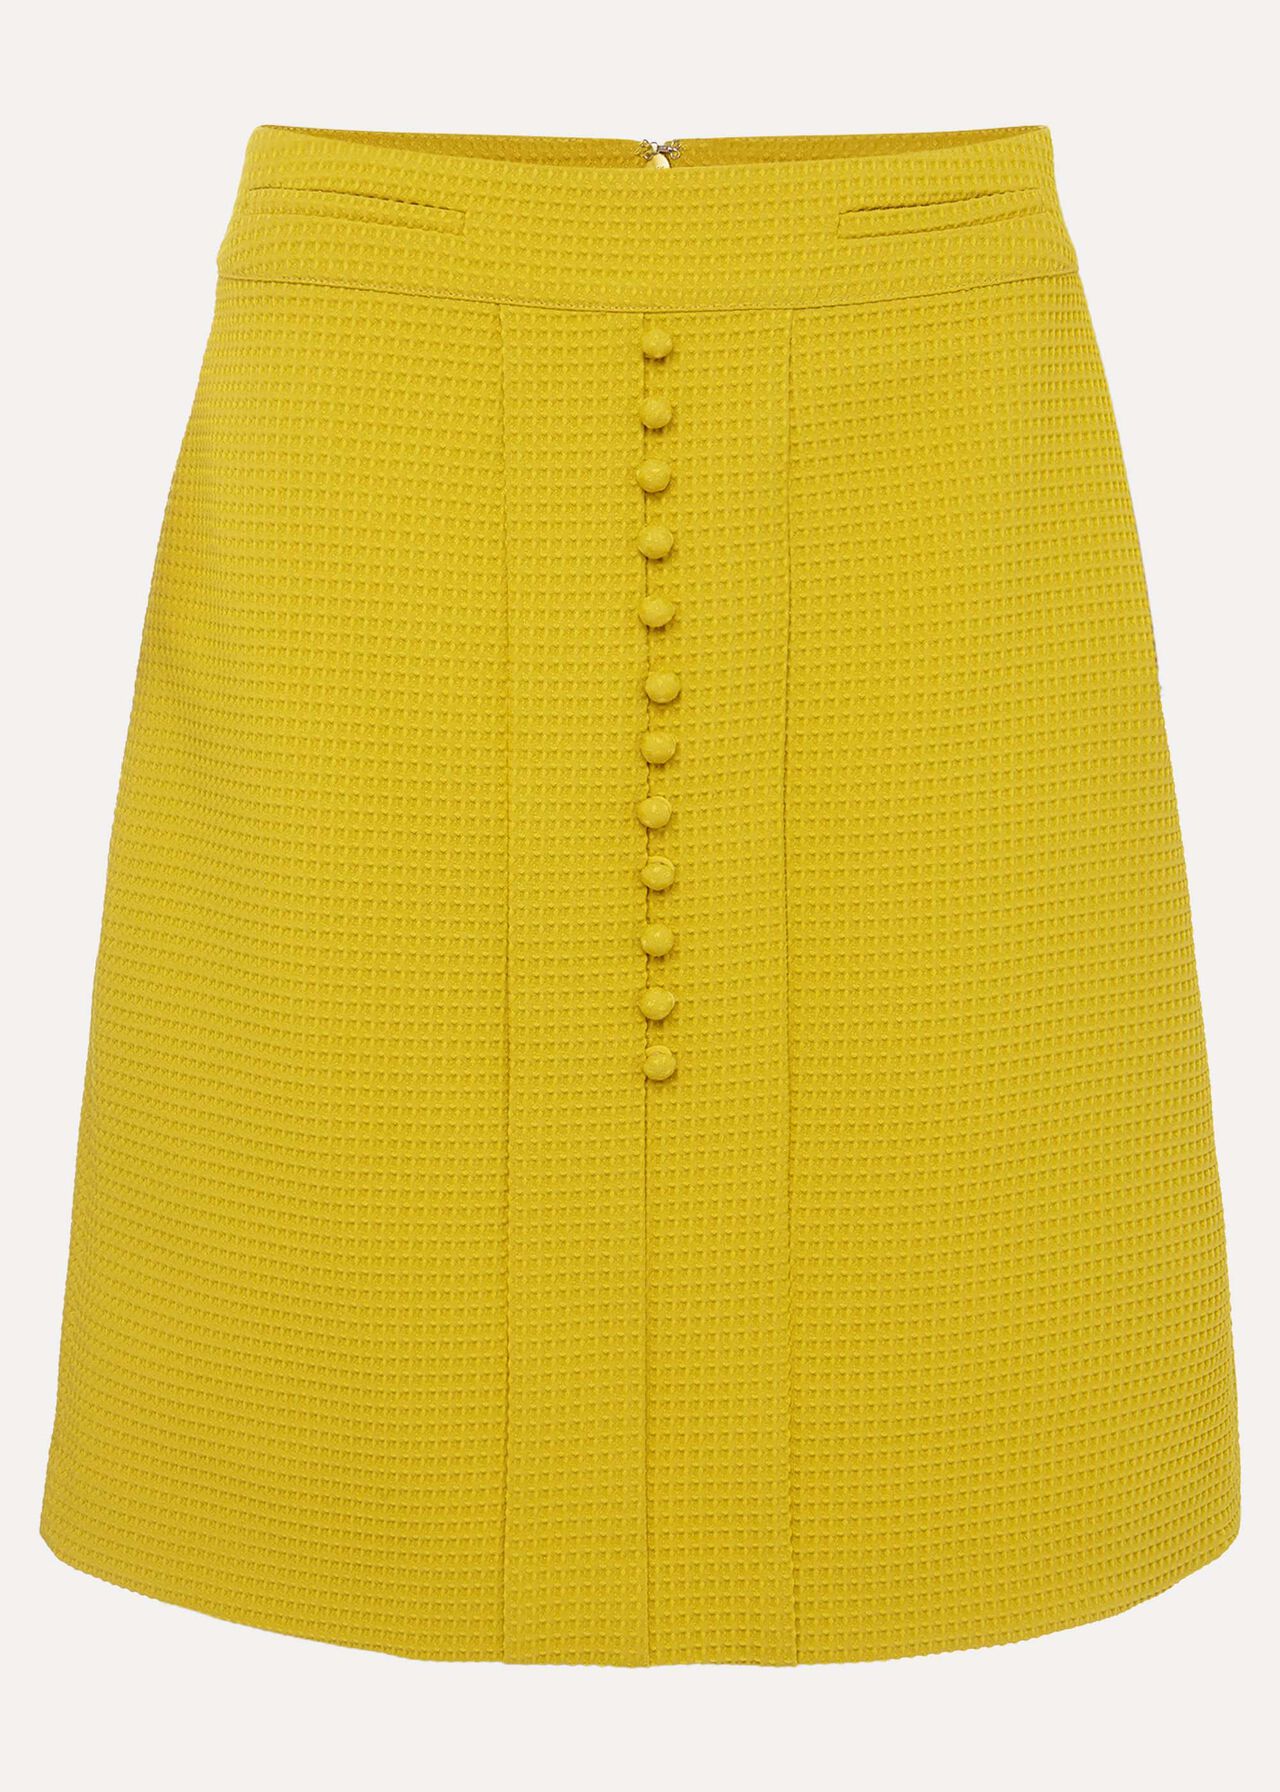 Skye Textured Skirt